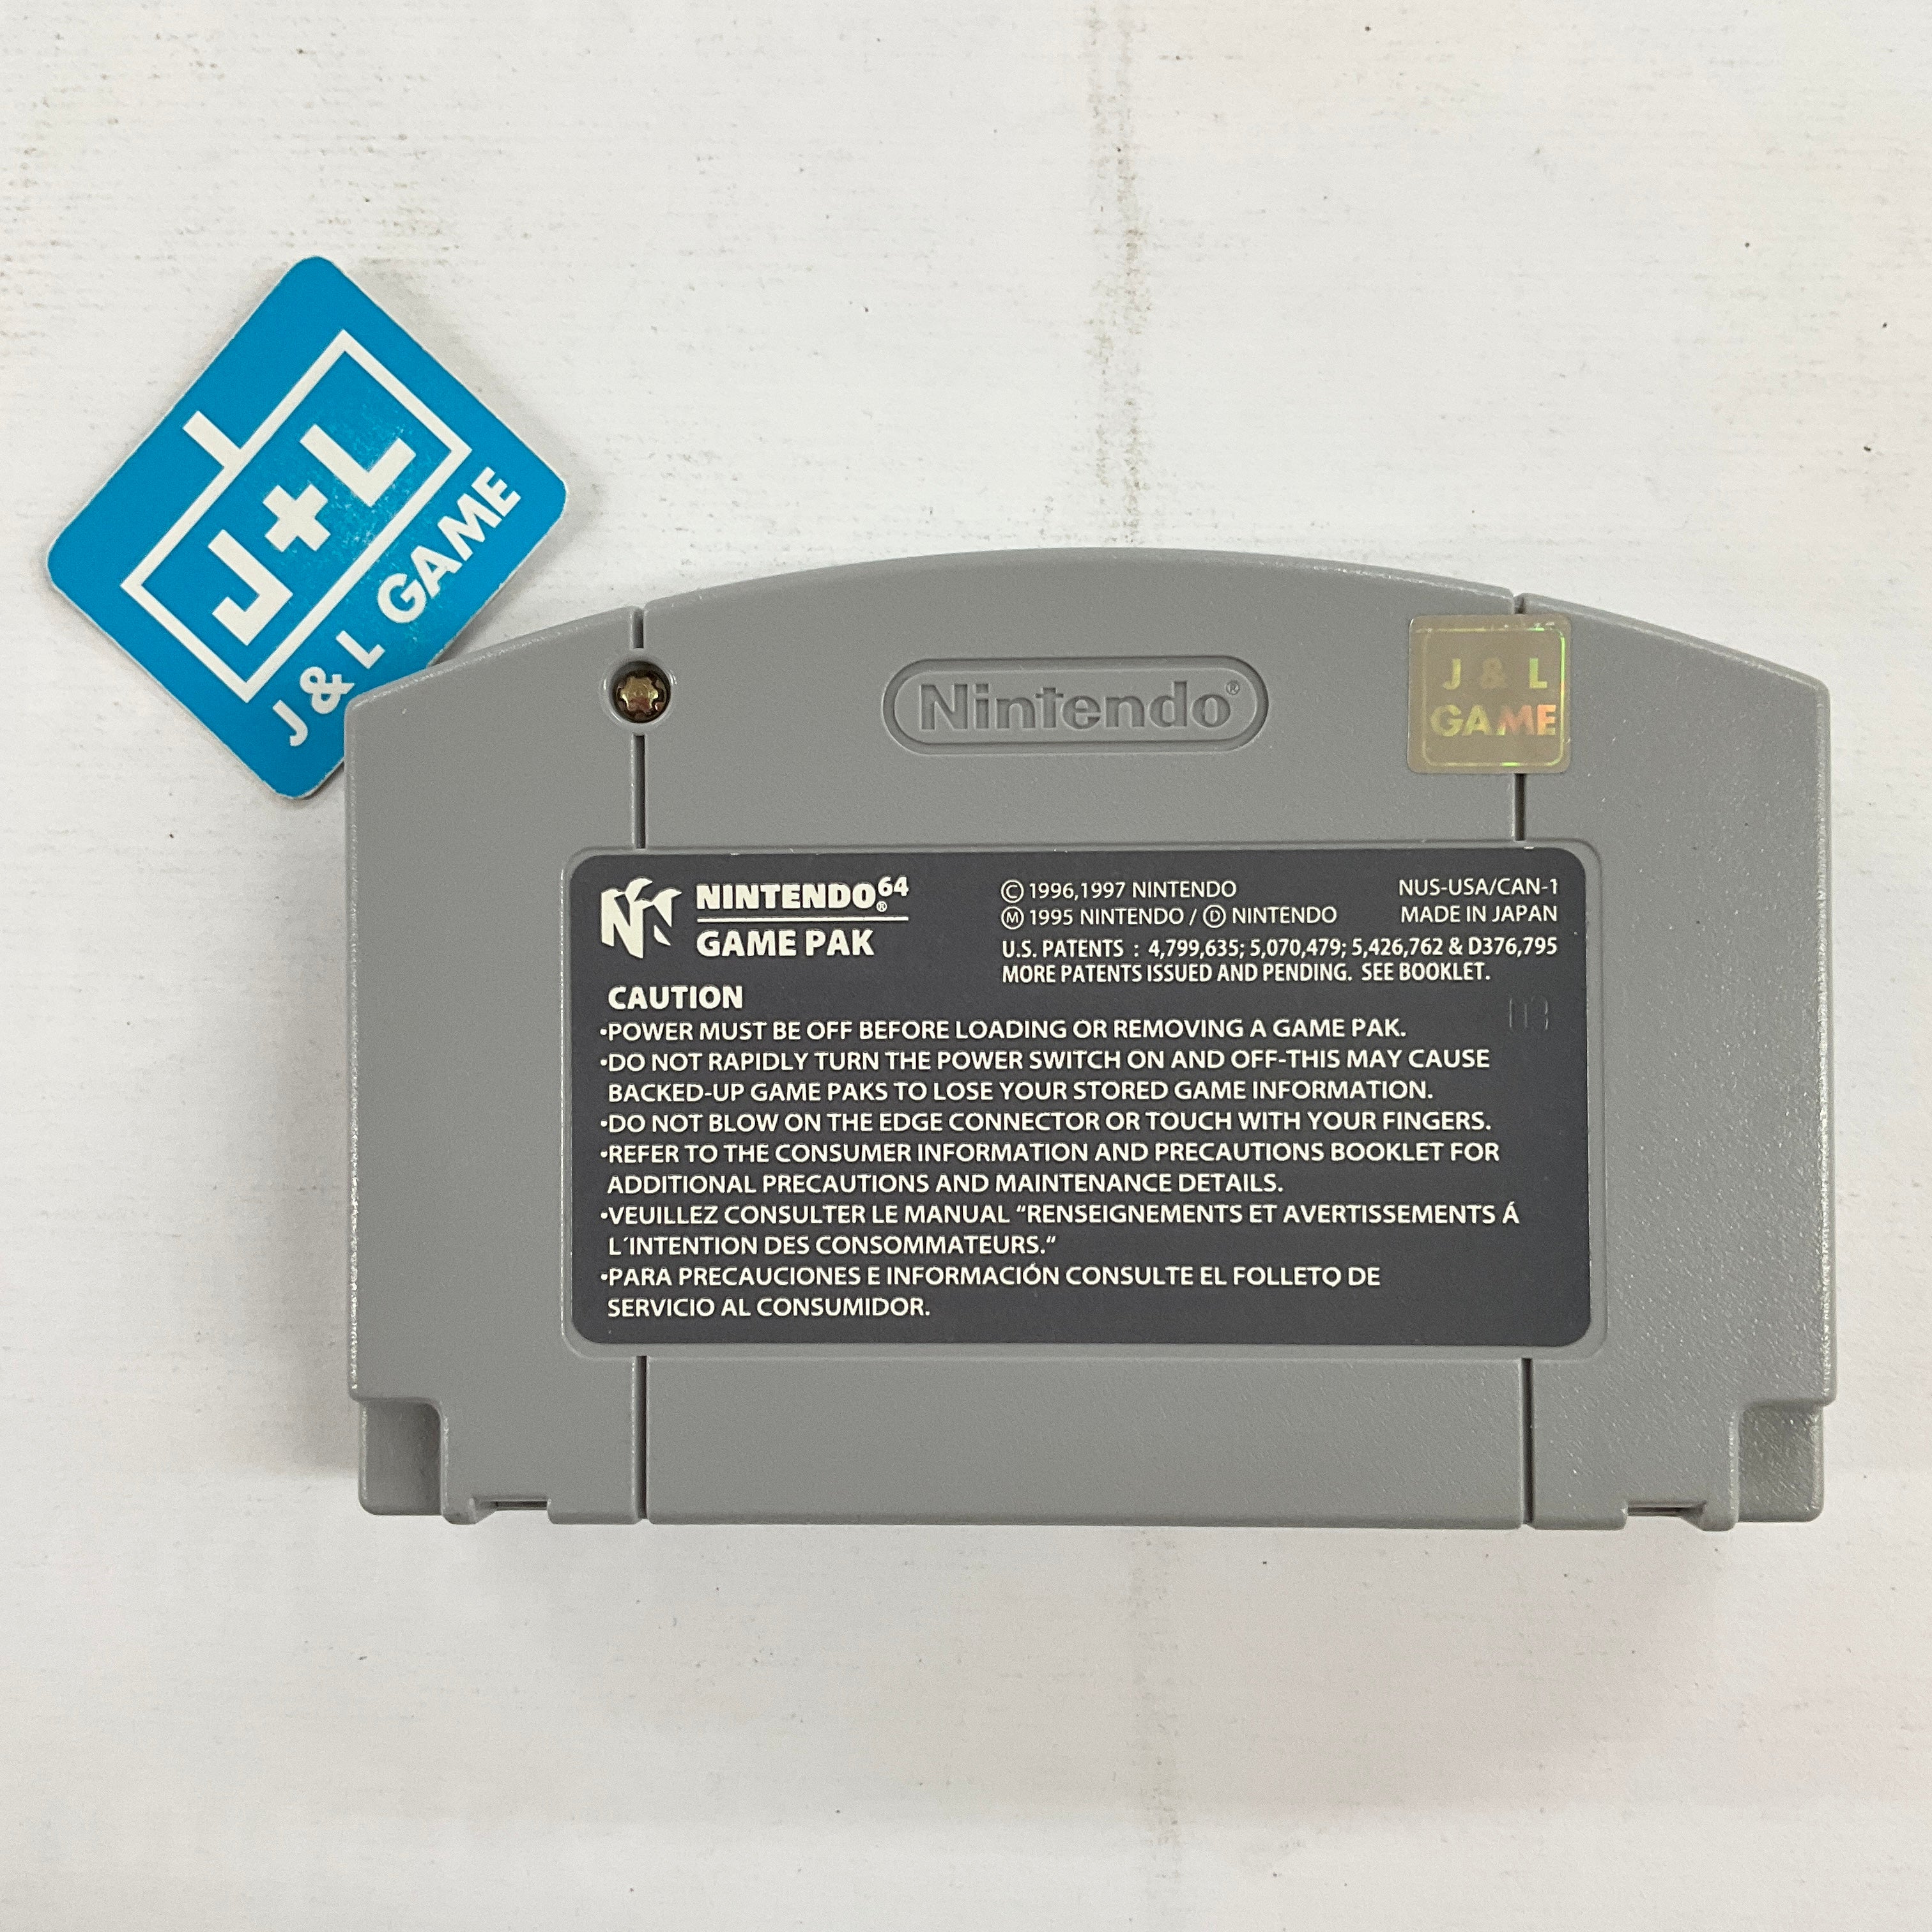 Gauntlet Legends - (N64) Nintendo 64 [Pre-Owned] Video Games Midway   